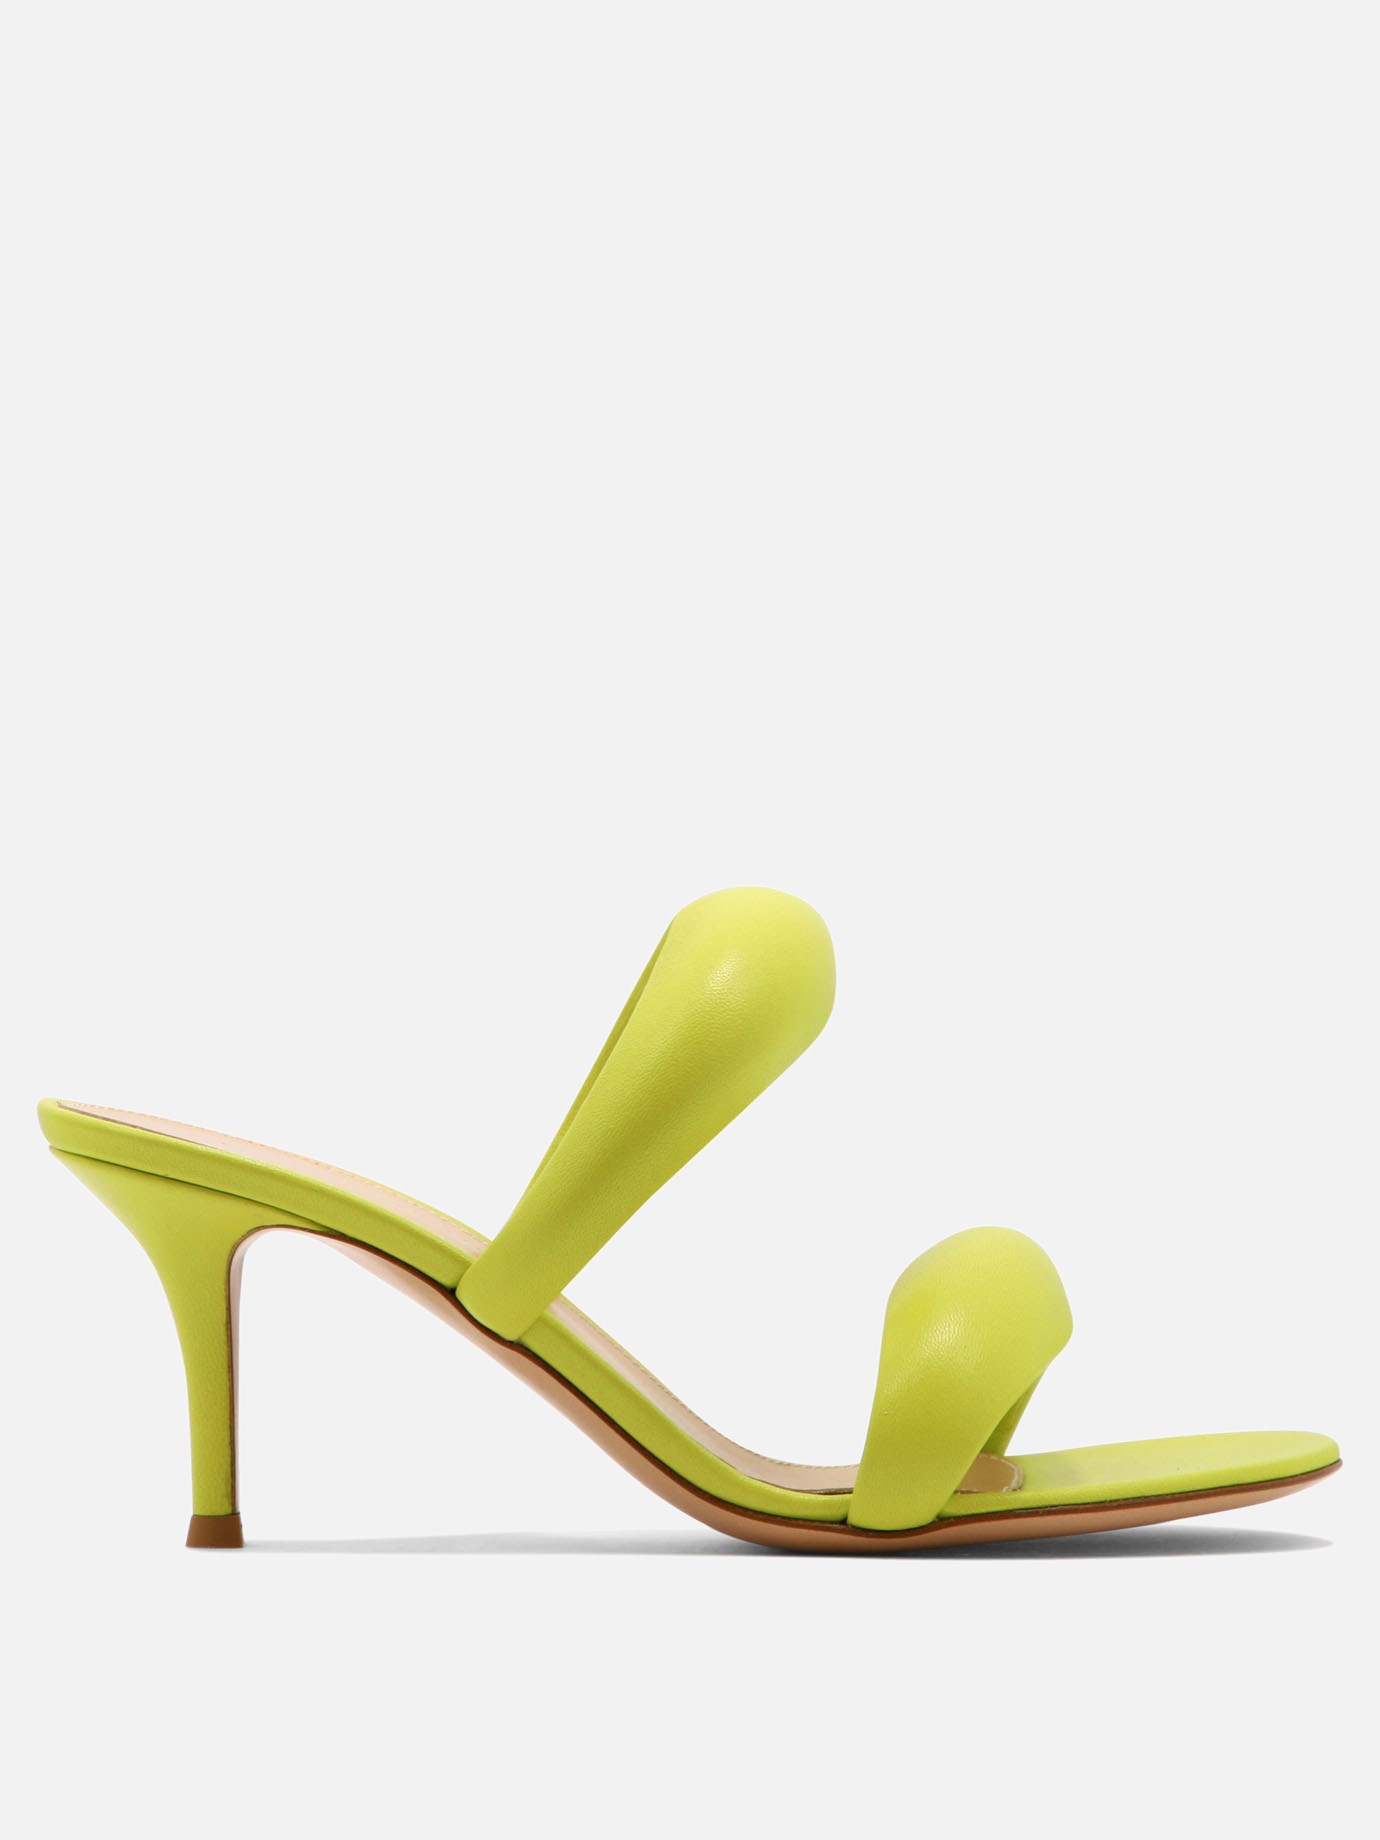  Bijoux  sandals by Gianvito Rossi